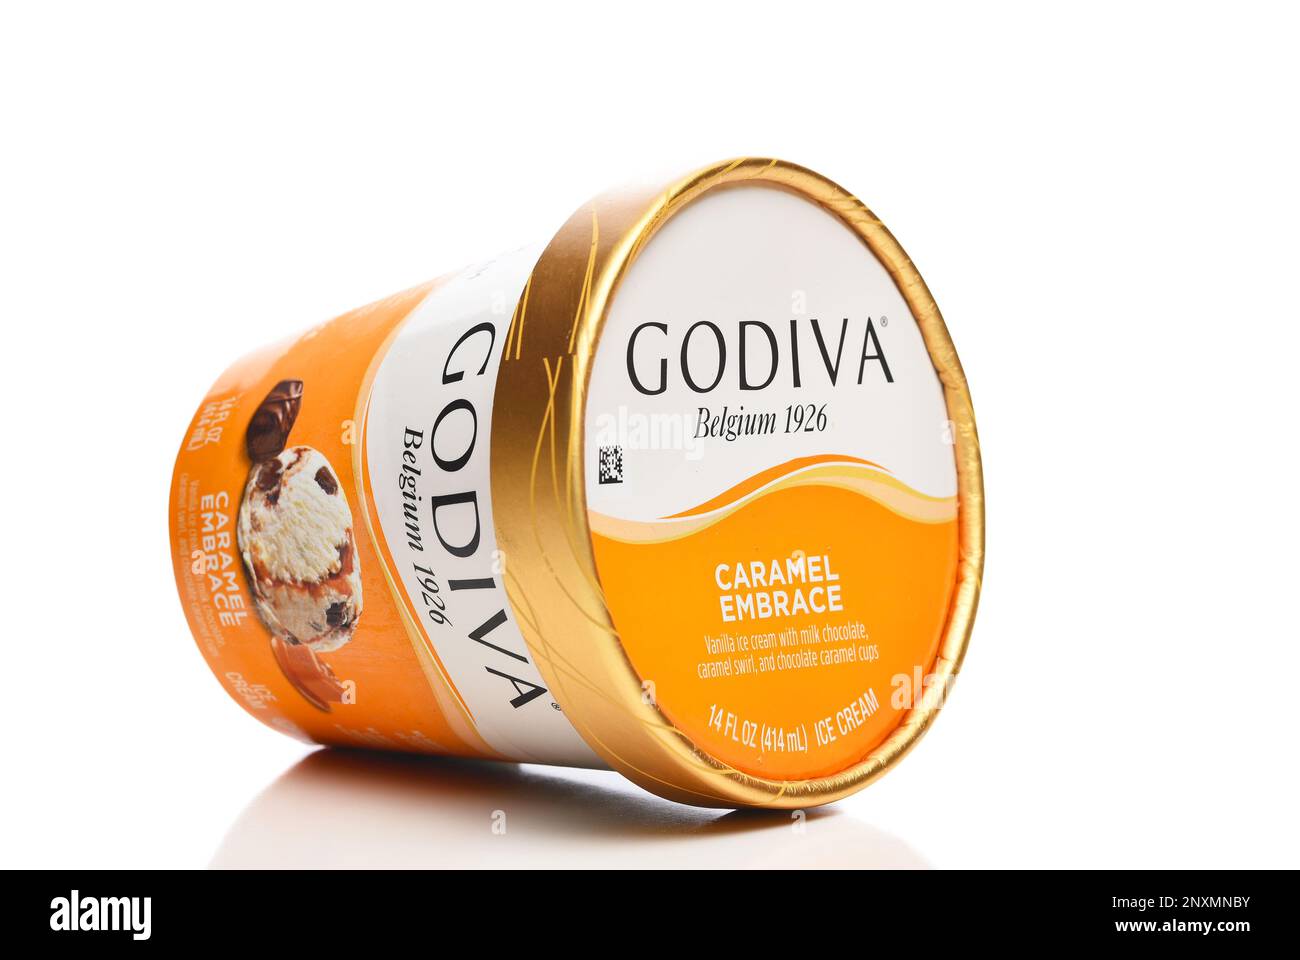 IRIVNE, CALIFORNIA - 01 MAR 2023: A Carton of Godiva Caramel Embrace ice cream on its side Stock Photo